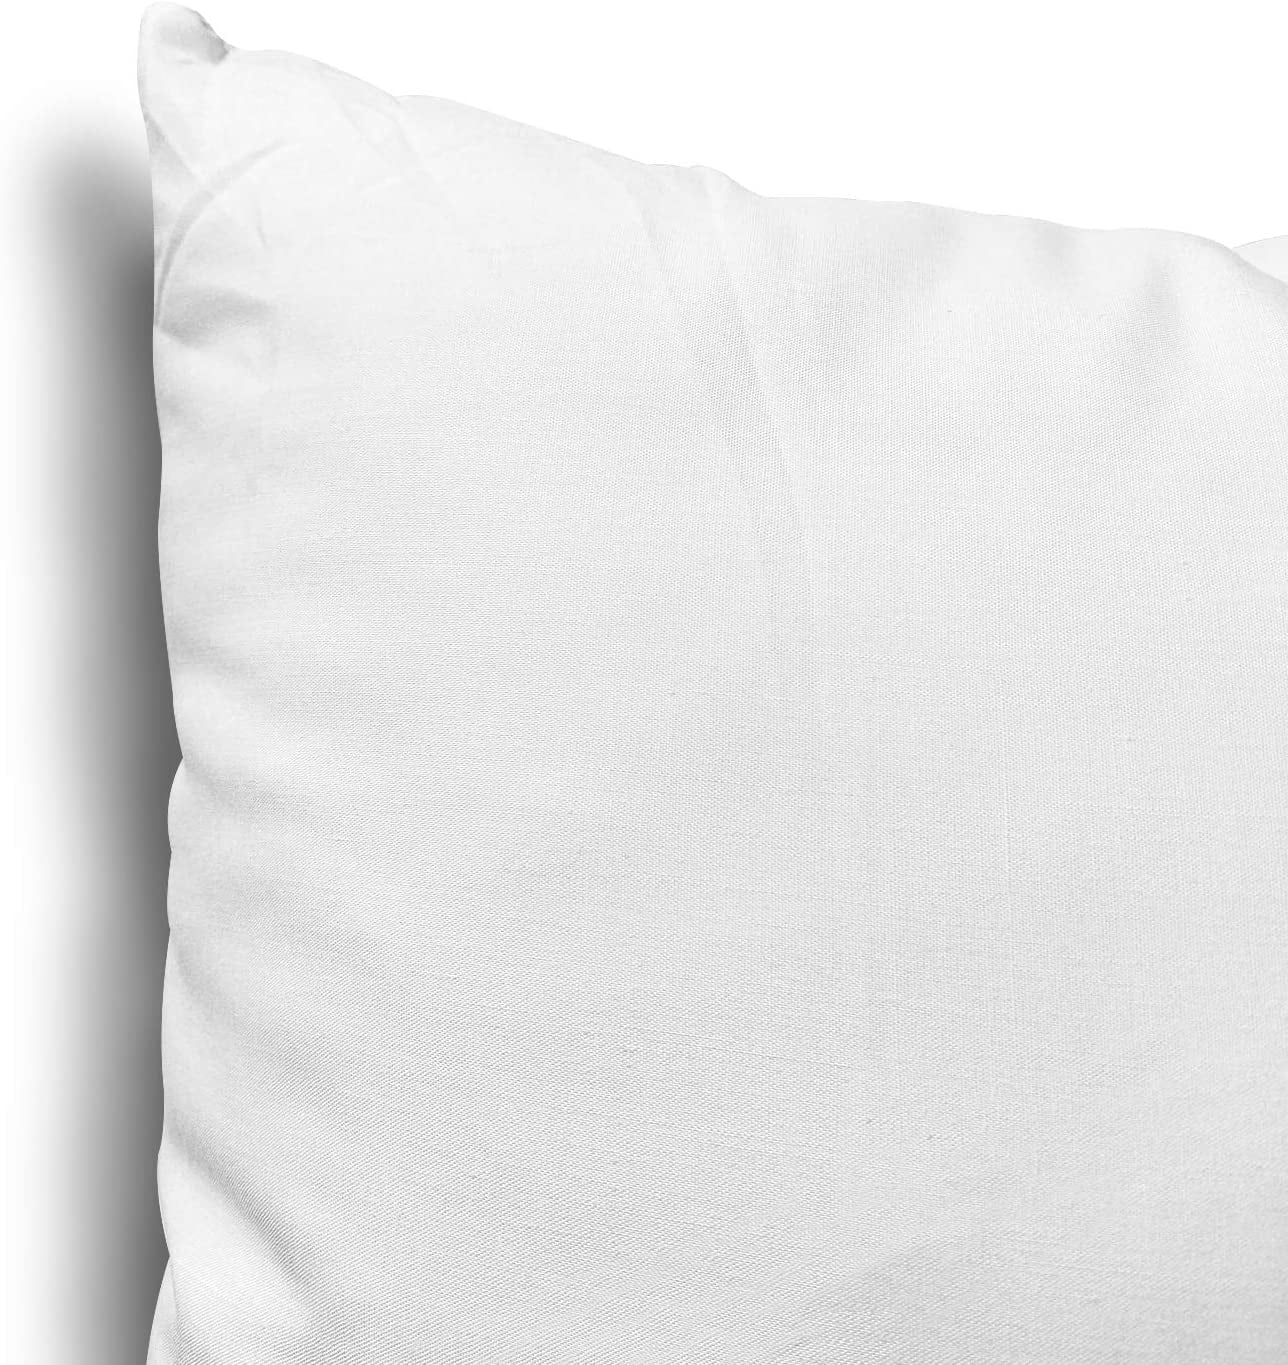 EDOW Throw Pillow Insert, Set of 2 Down Alternative Polyester Square Form Decorative Pillow, Cushion,Sham STUFFER. (White, 18x18)